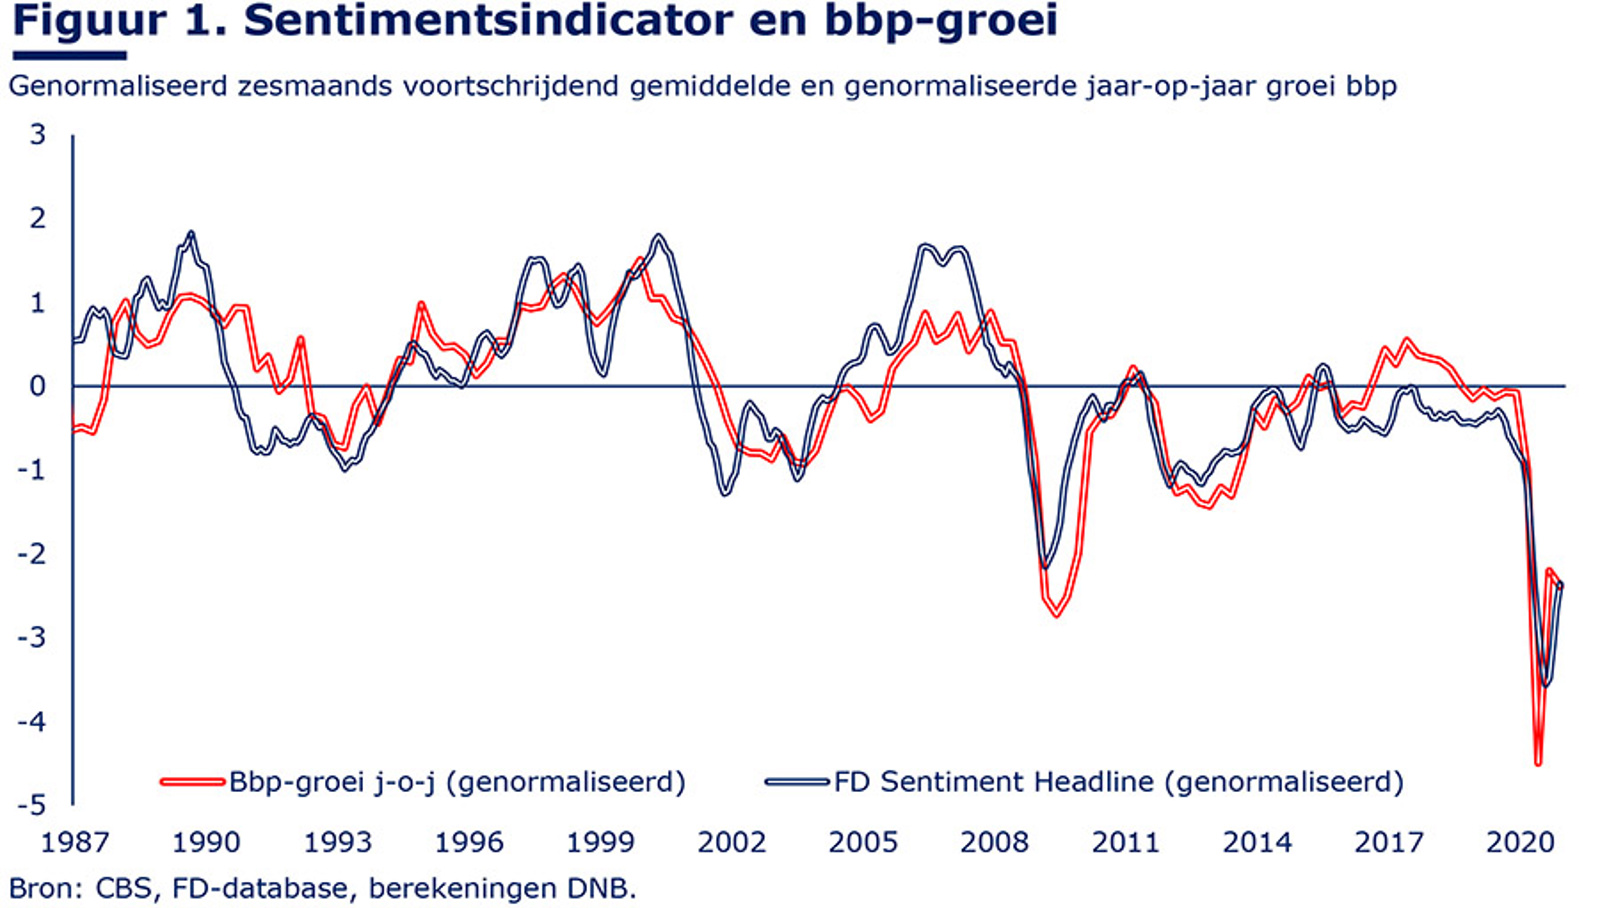 Sentimentsindicator en bbp-groei